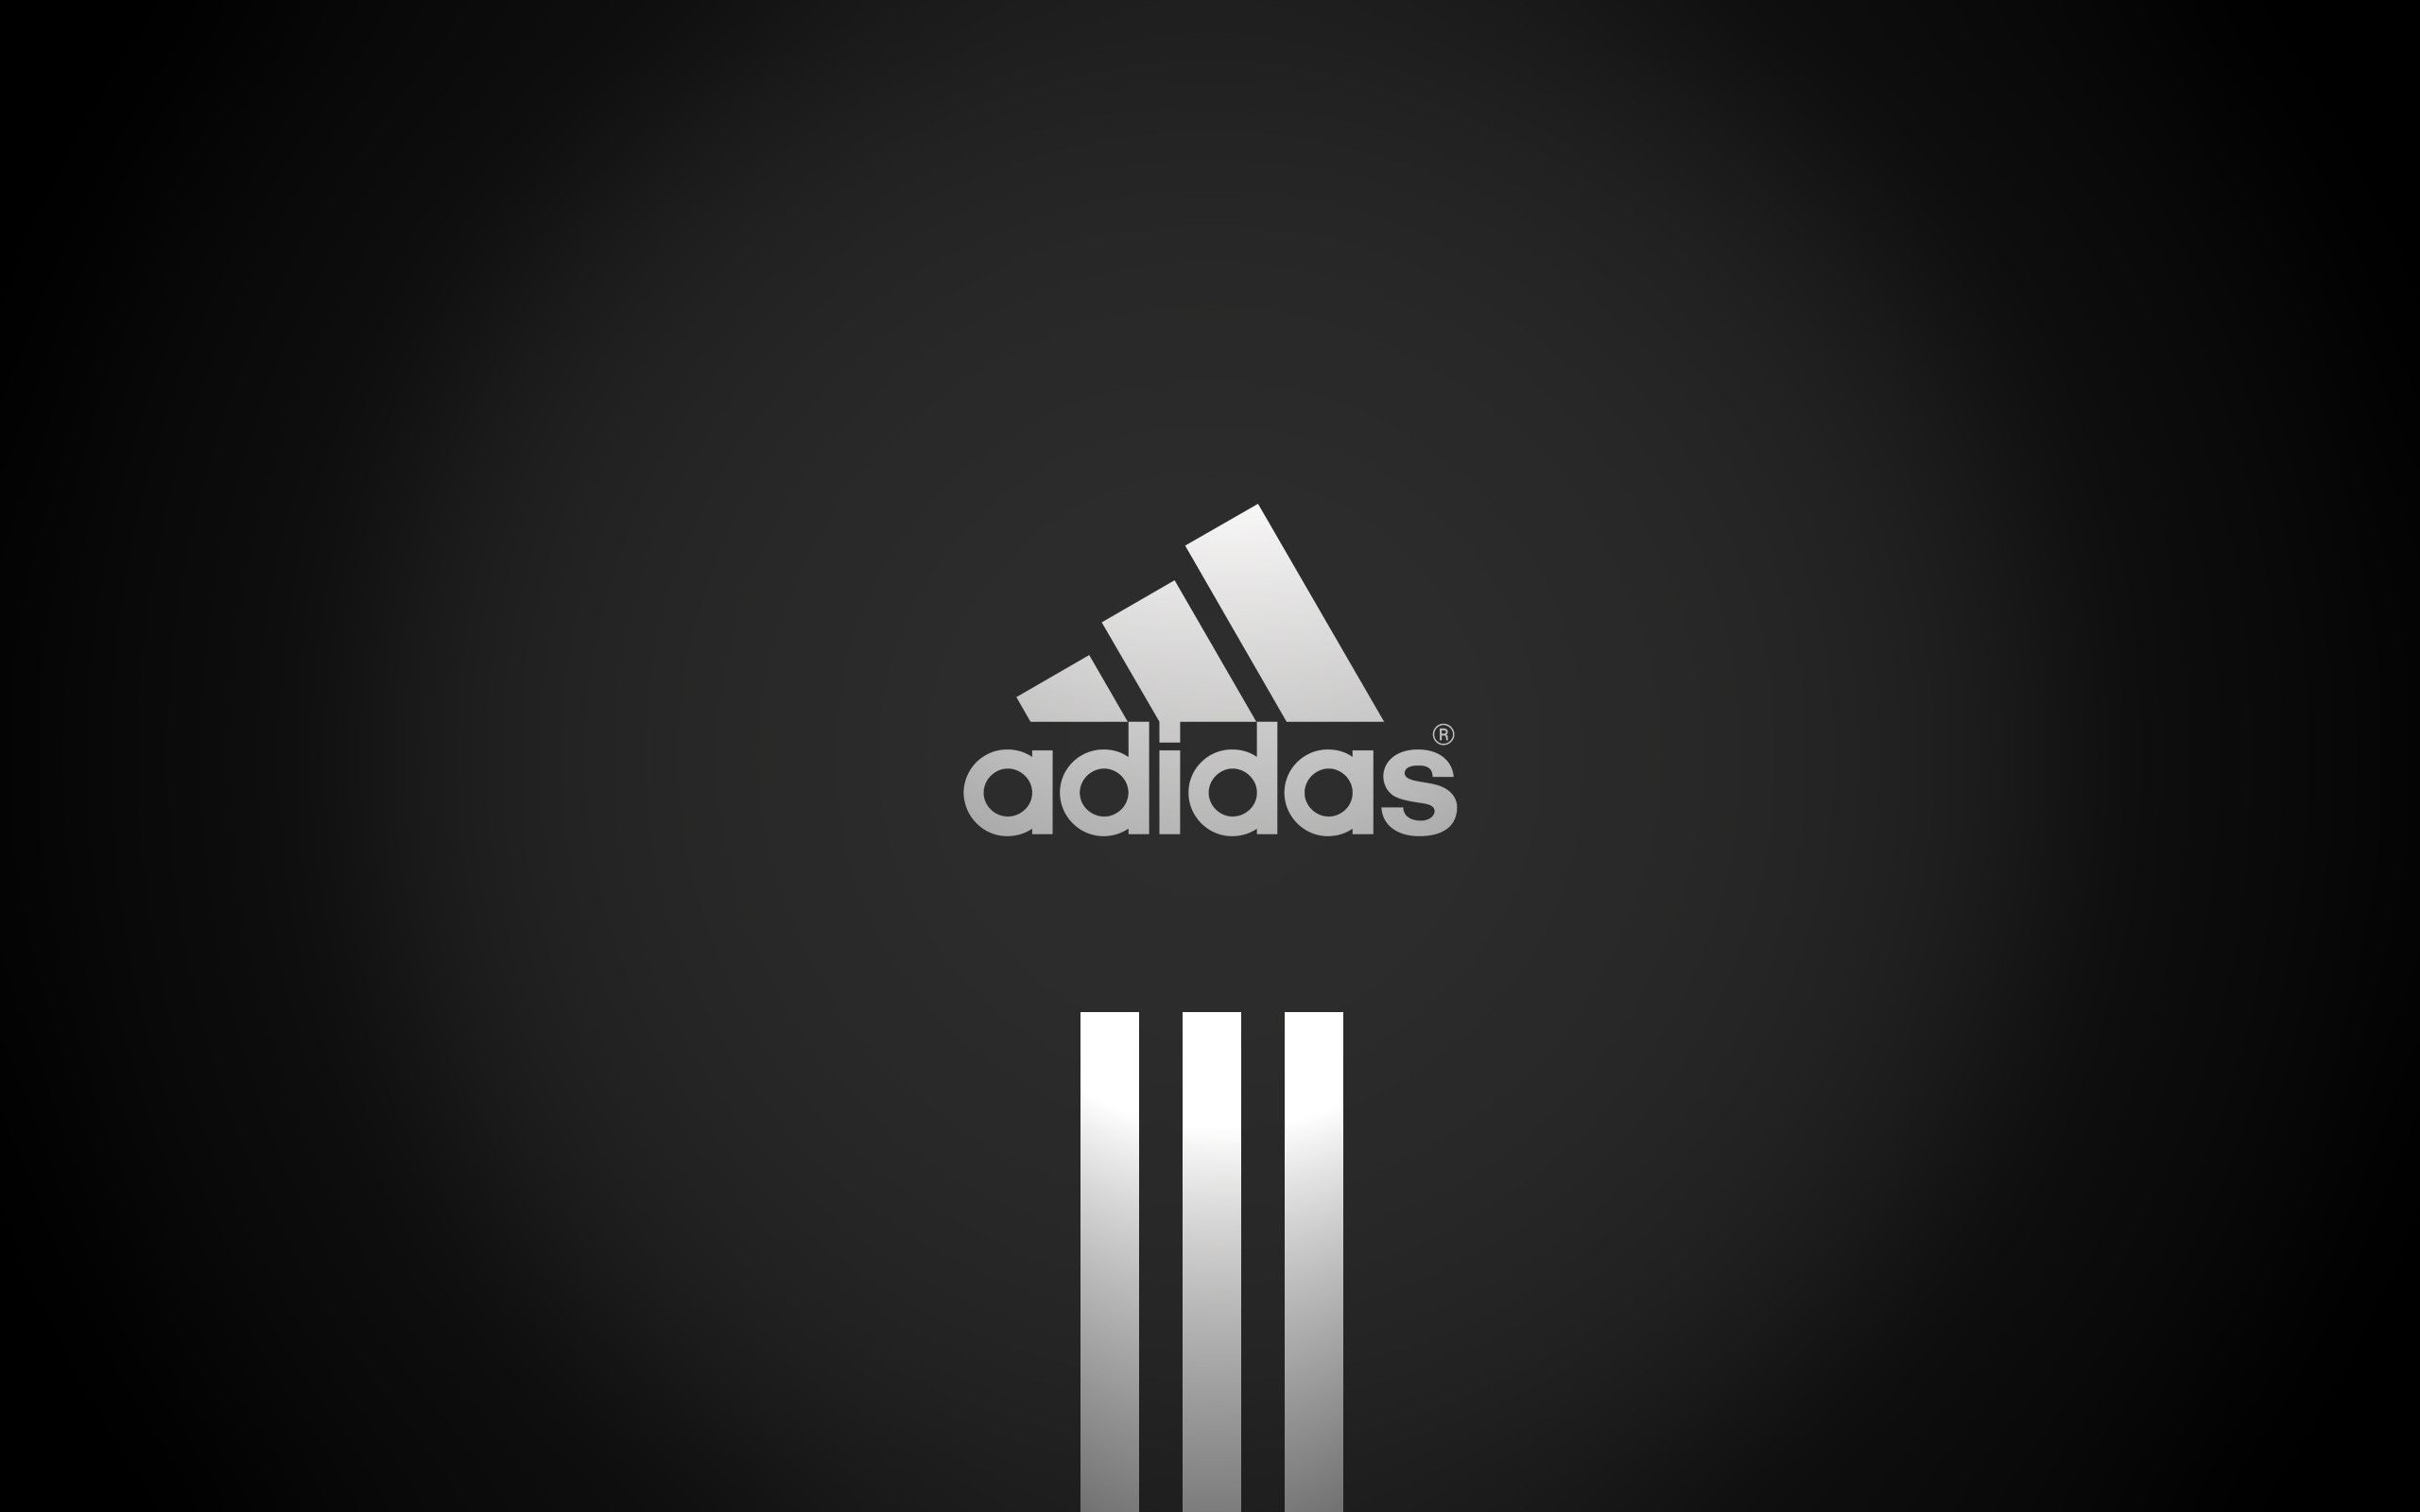 Messi Logo Wallpapers